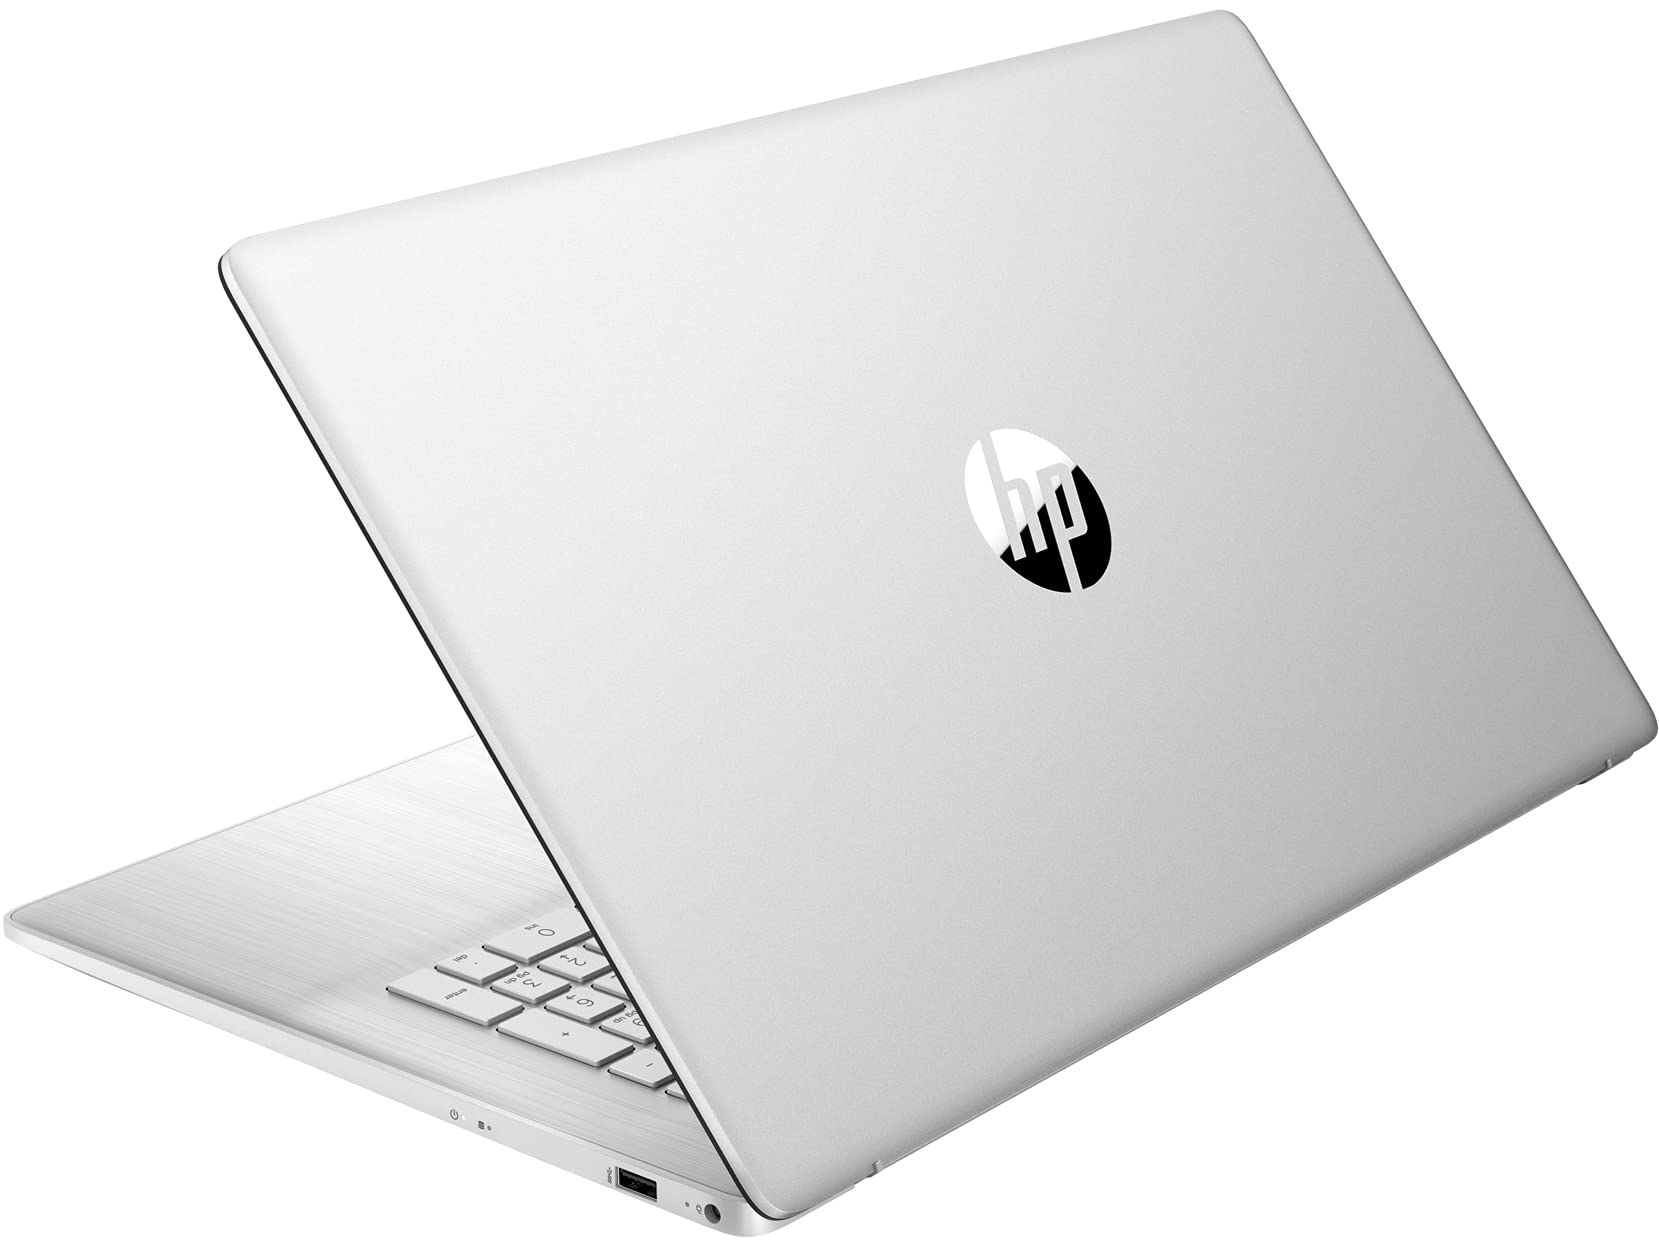 HP 17t-cn000 Home & Business Laptop (Intel i5-1135G7 4-Core, 64GB RAM, 256GB SATA SSD, Intel Iris Xe, 17.3" Touch HD+ (1600x900), WiFi, Bluetooth, Win 10 Pro) with MS 365 Personal, Hub